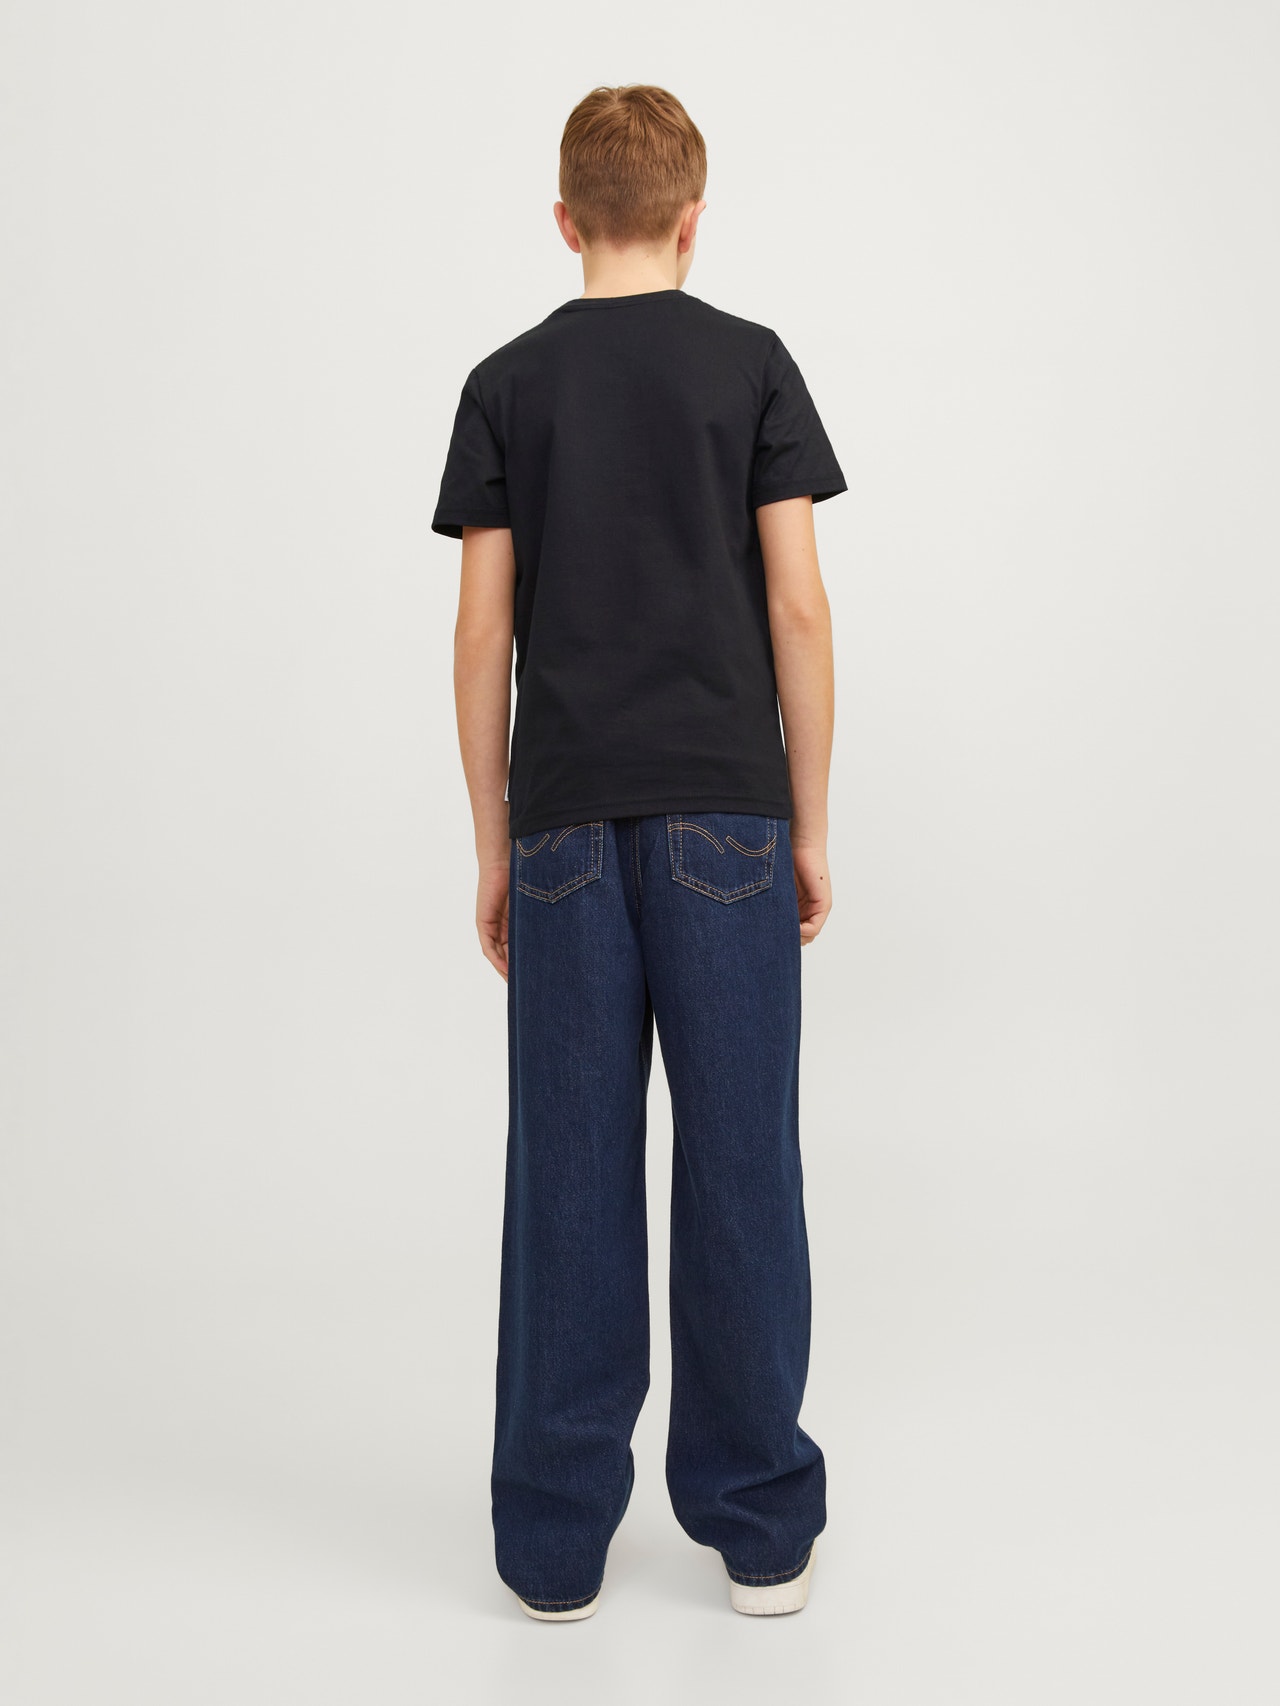 Jack & Jones Camiseta Estampado Para chicos -Black - 12254031